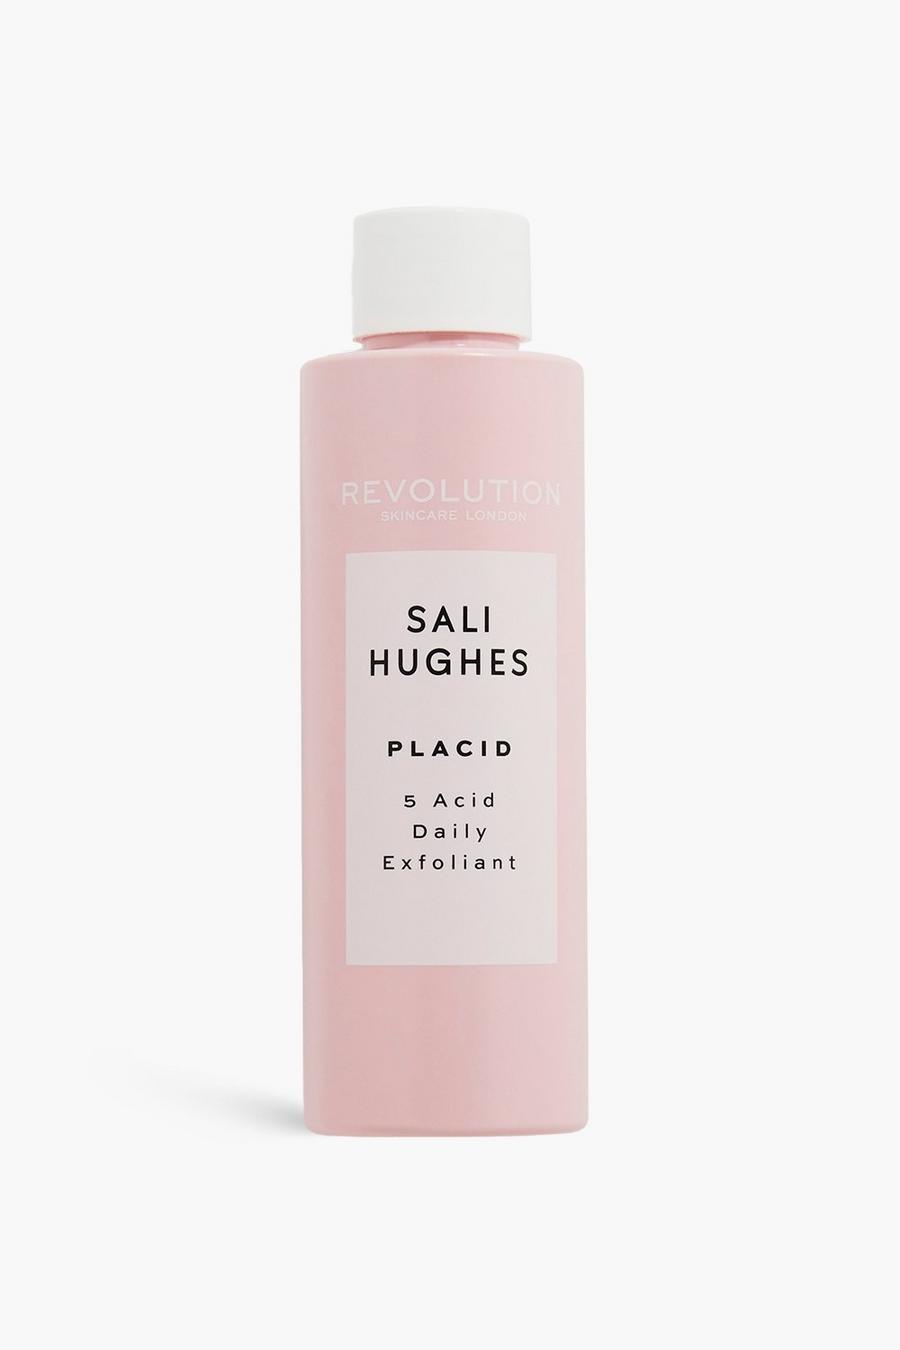 Revolution Skin X Sali Hughes - Esfoliante a base di 5 acidi, Pink rosa